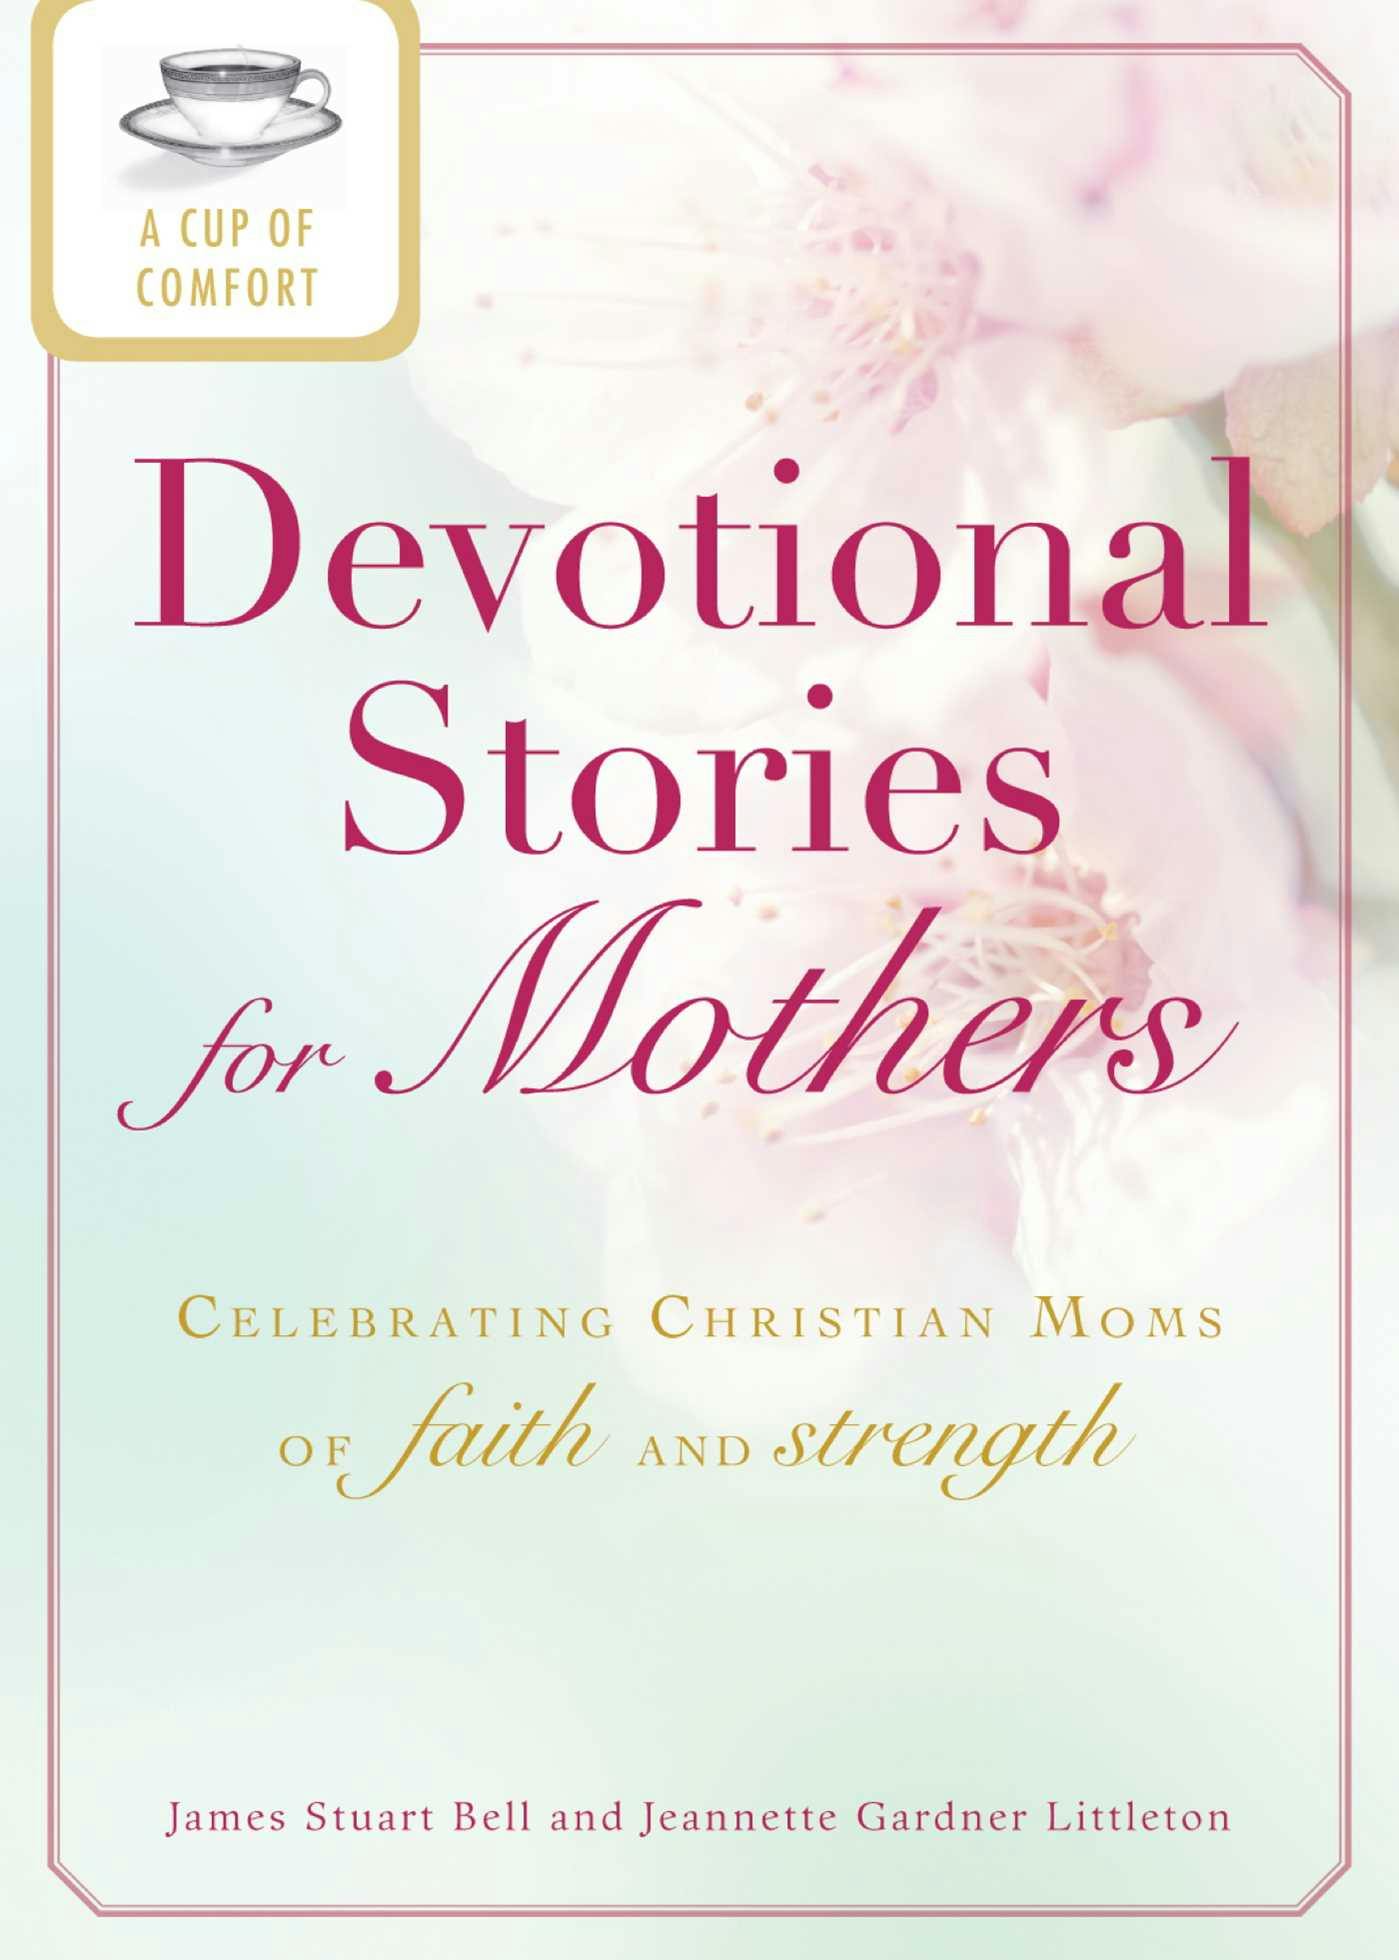 A Cup of Comfort Devotional Stories for Mothers: Celebrating Christian moms of faith and strength - James Stuart Bell, Jeanette Gardner Littleton